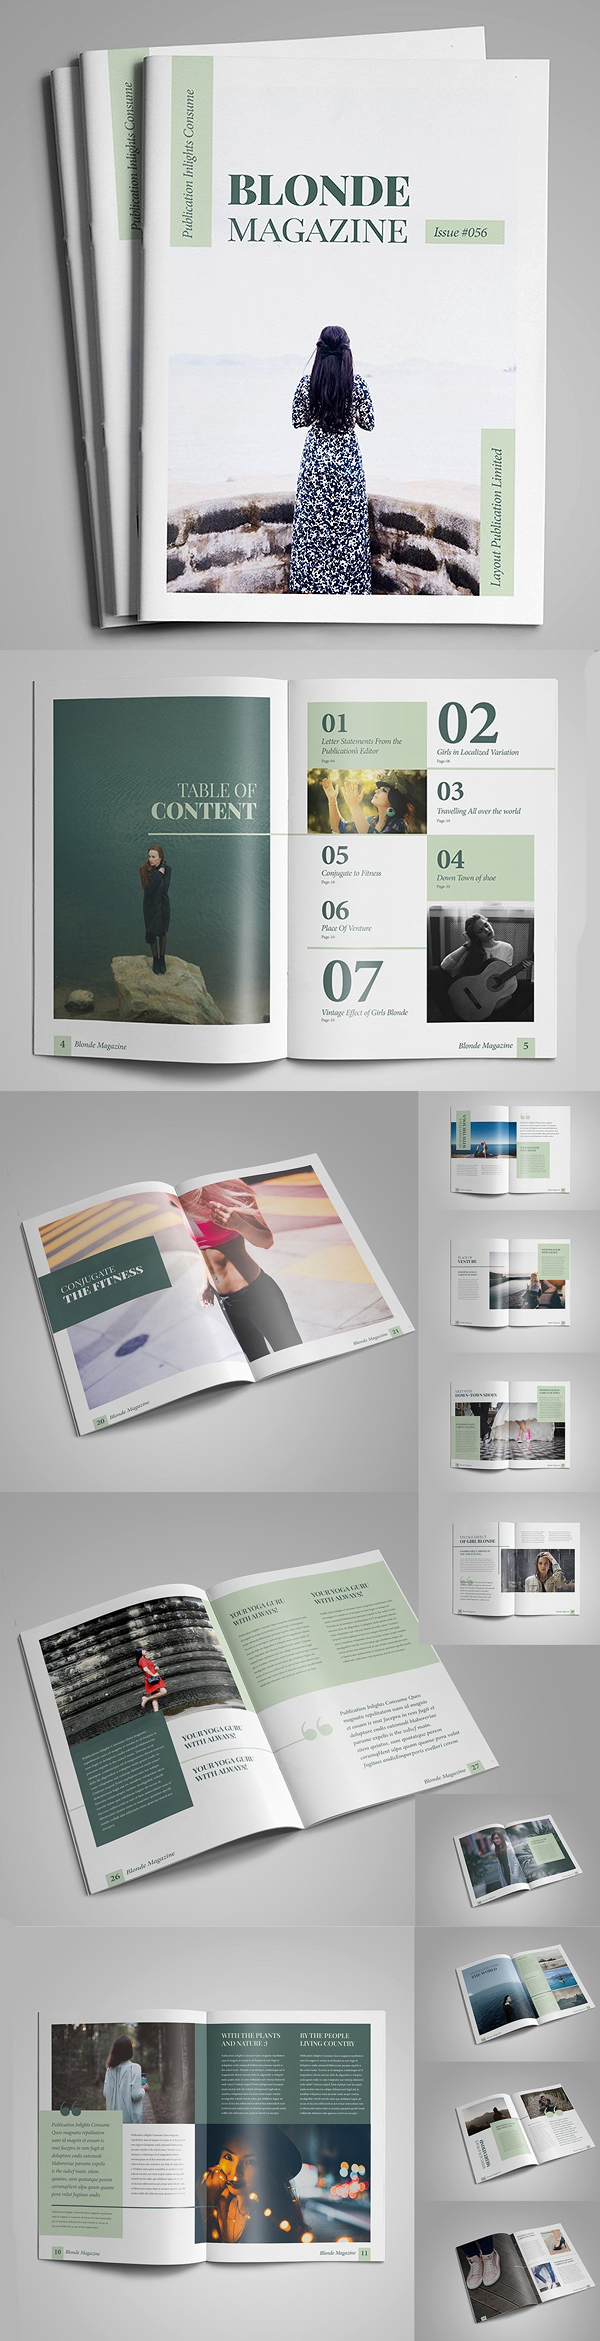 100 Professional Corporate Brochure Templates - 21